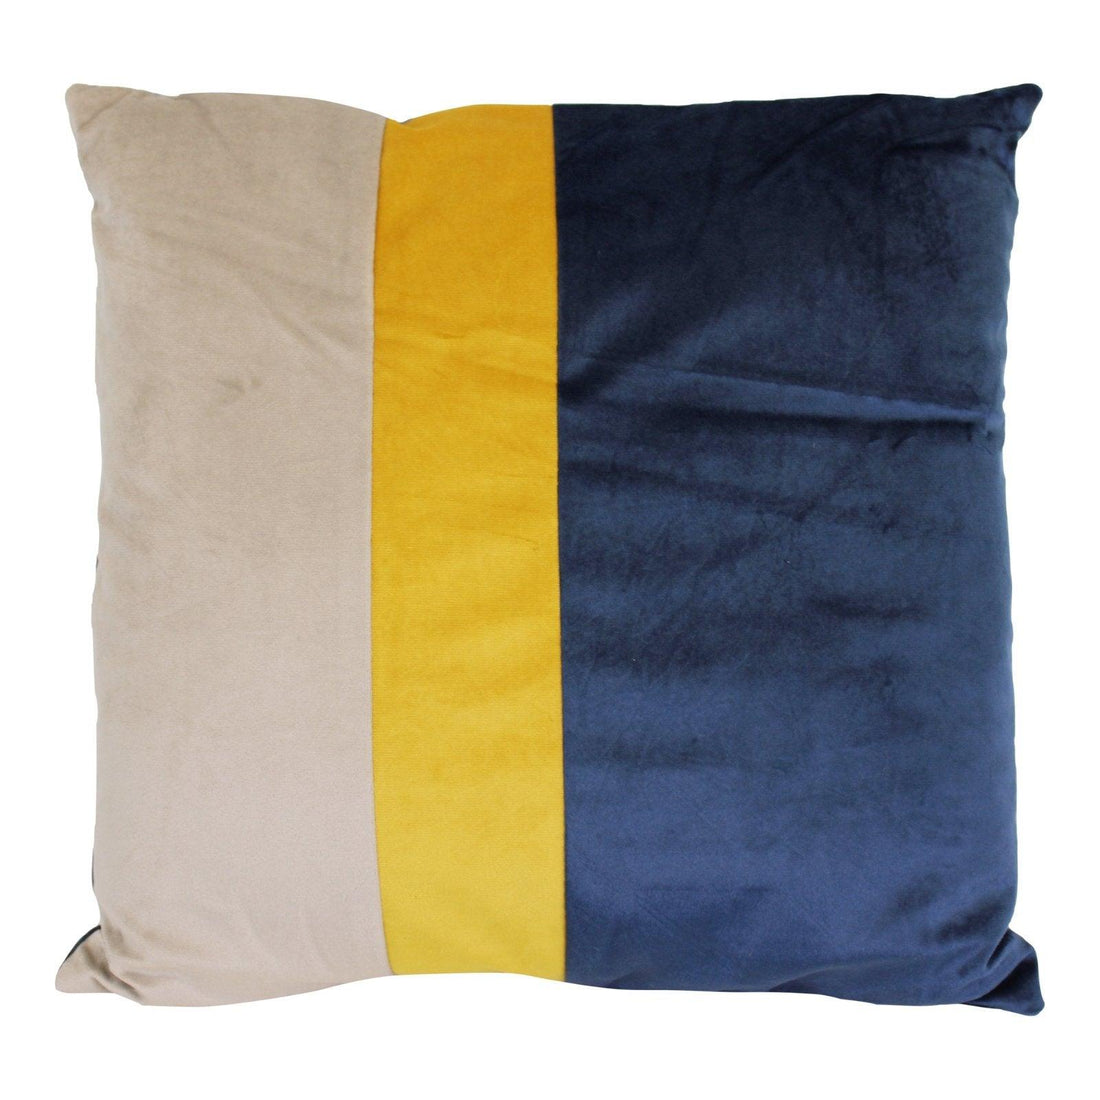 3 Panel Velour Scatter Cushion - £20.99 - Throw Pillows 